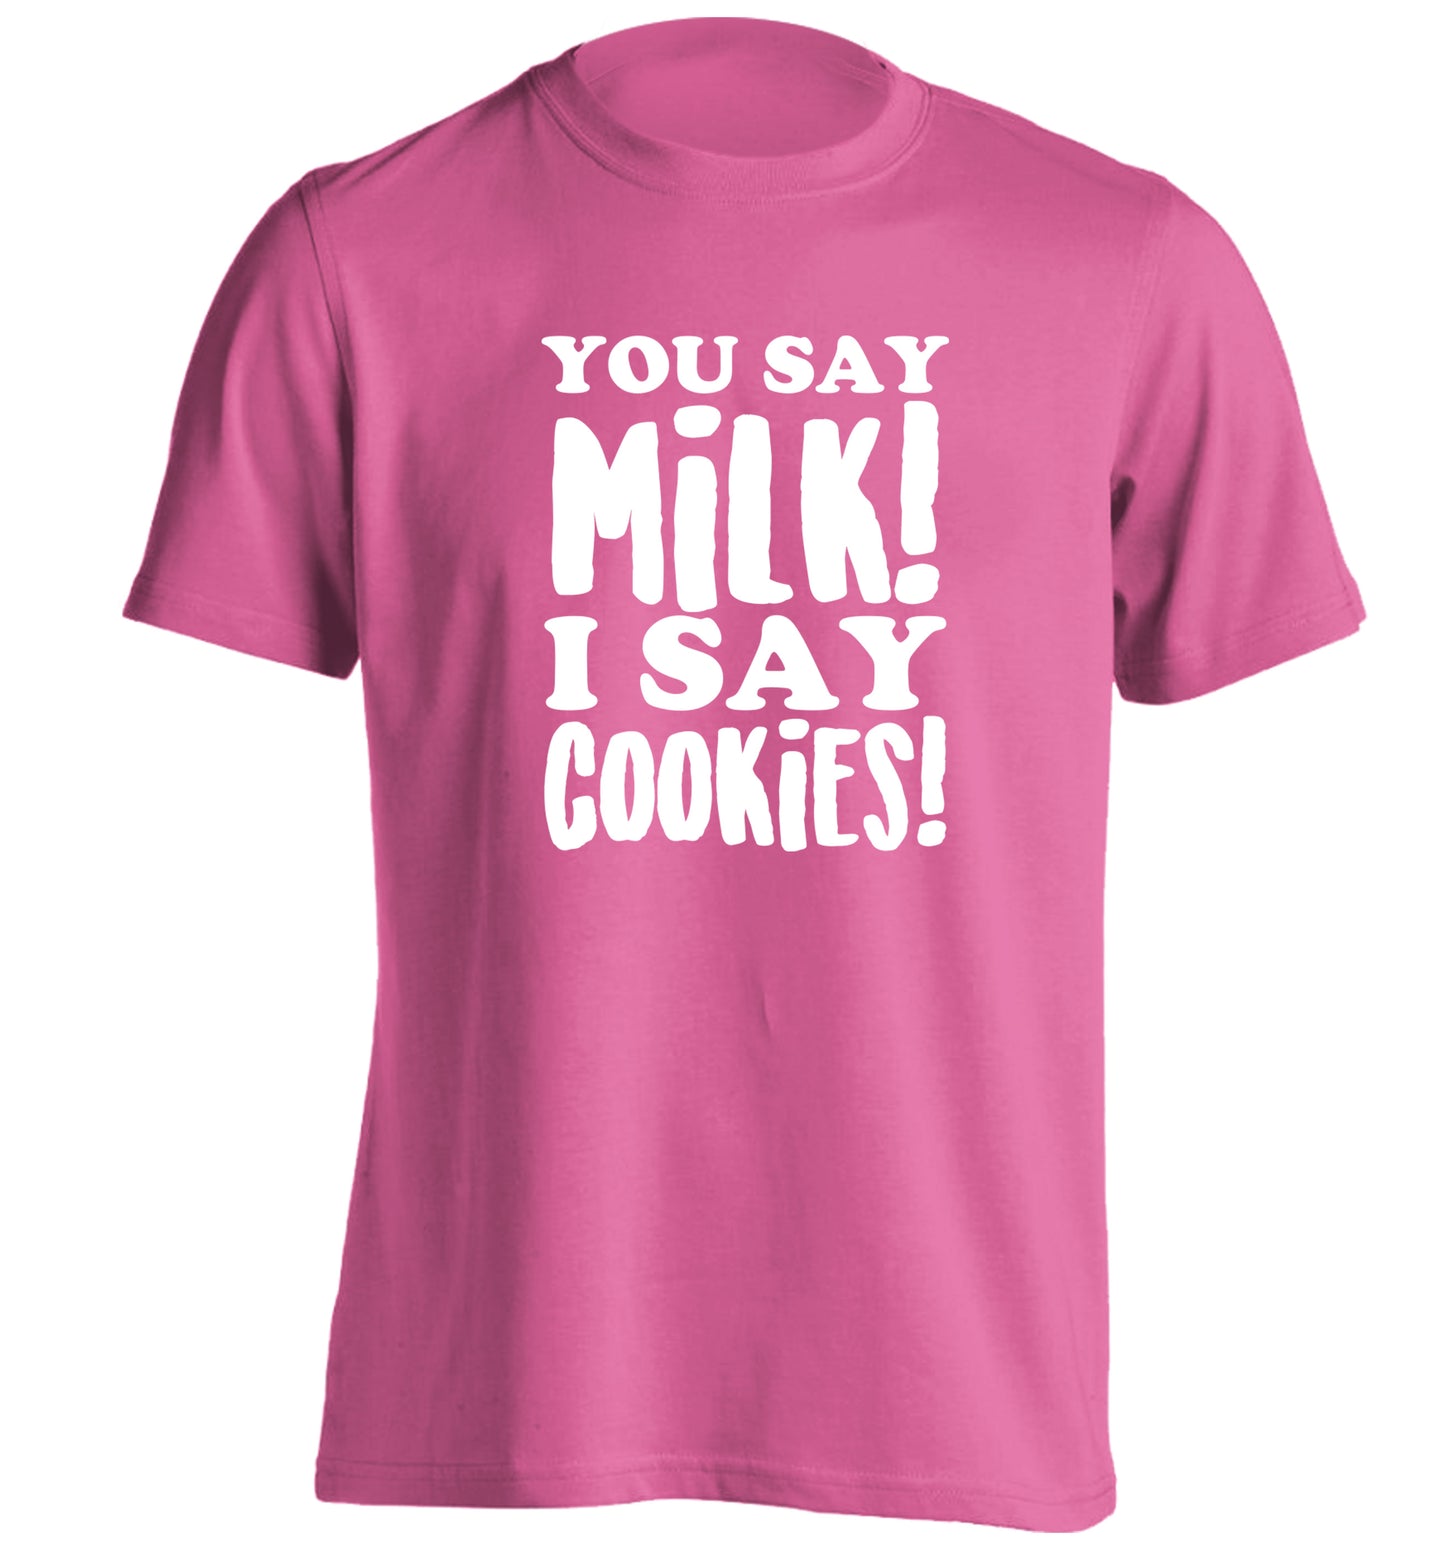 You say milk I say cookies! adults unisex pink Tshirt 2XL